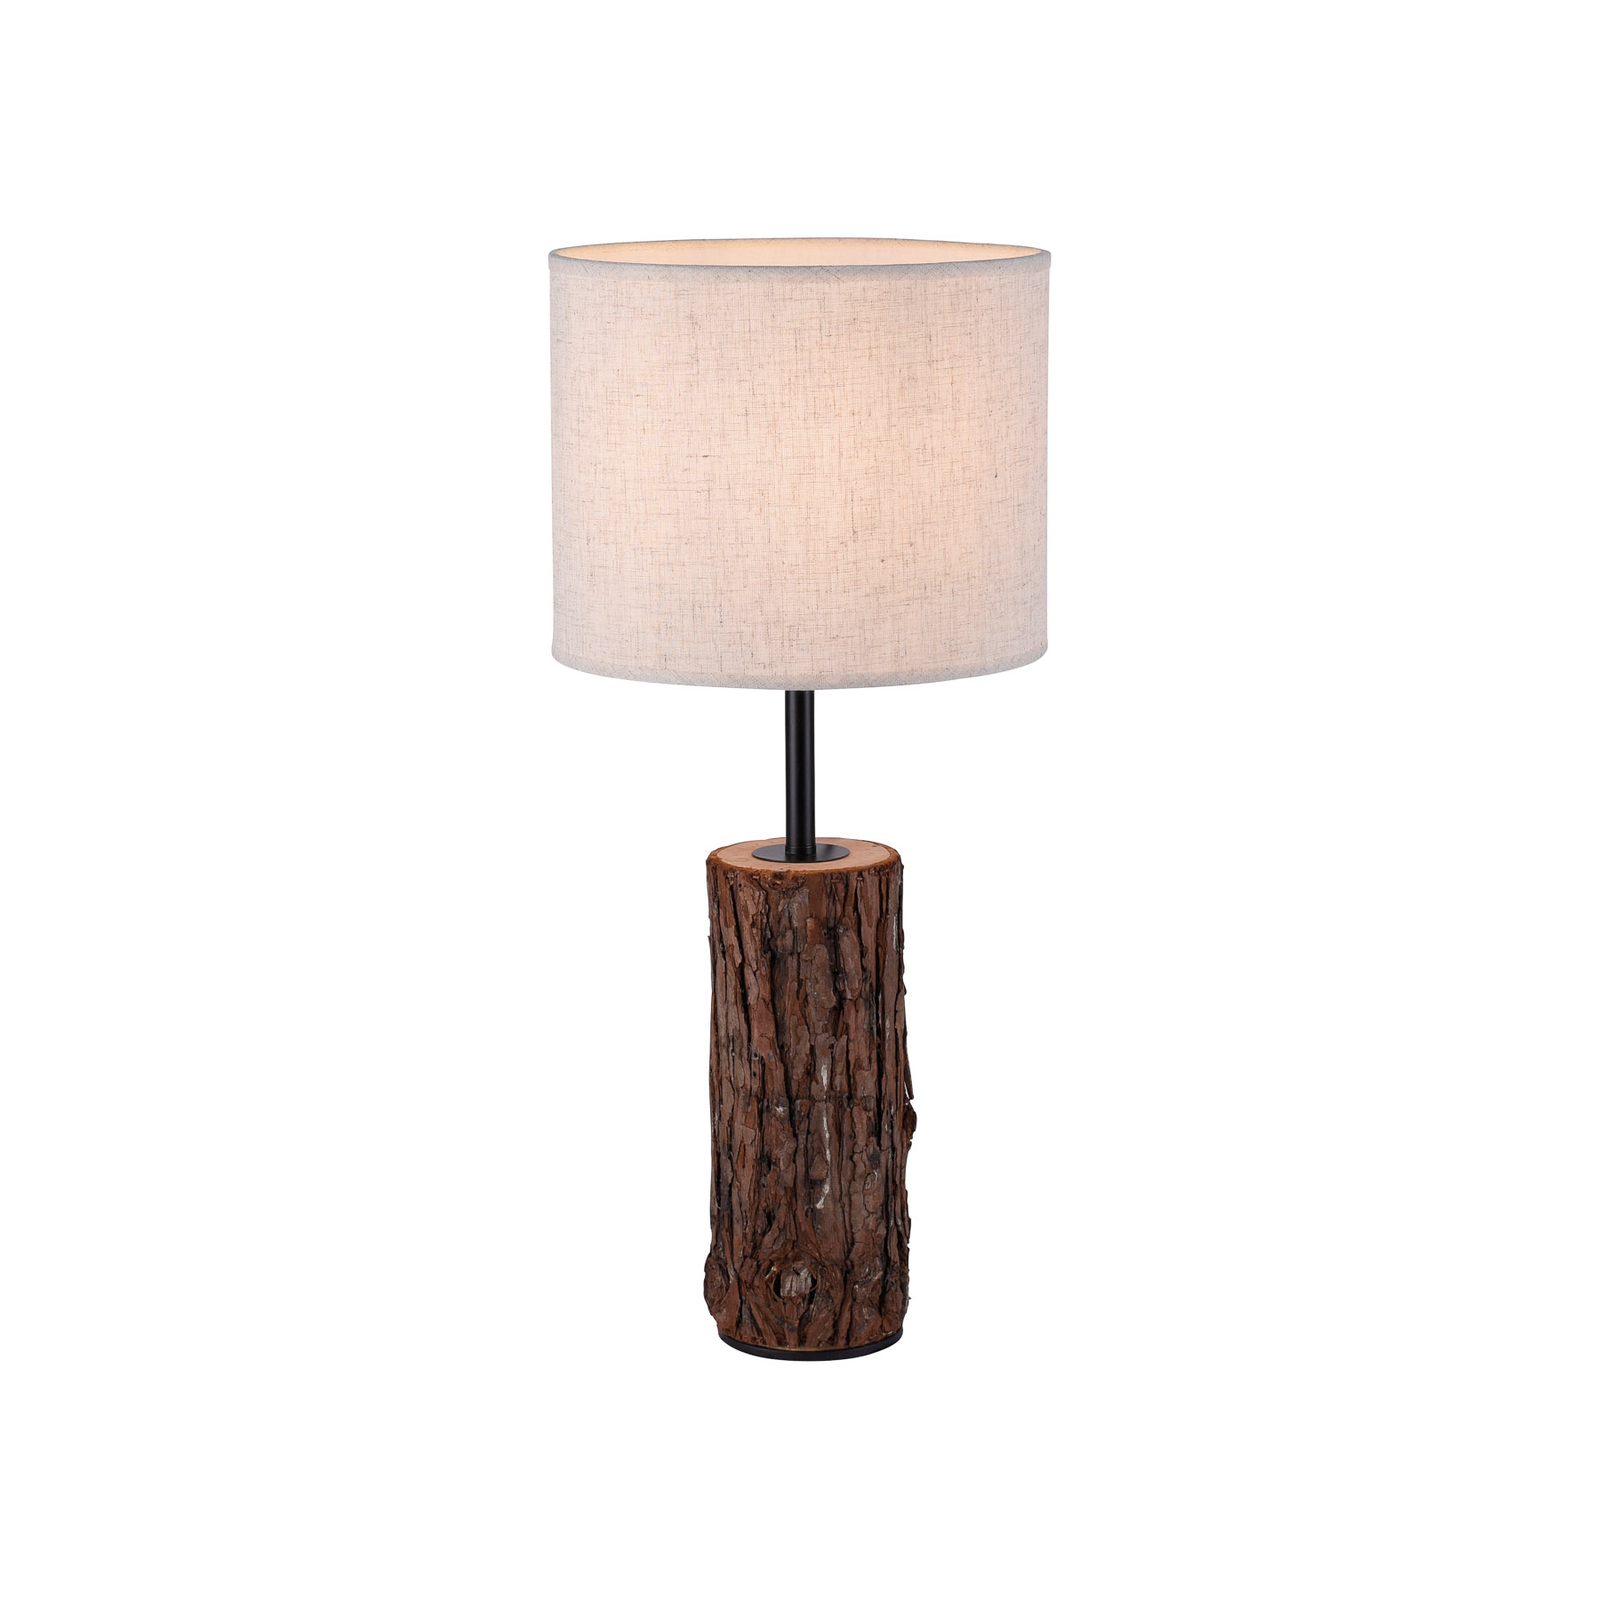 Bark table lamp